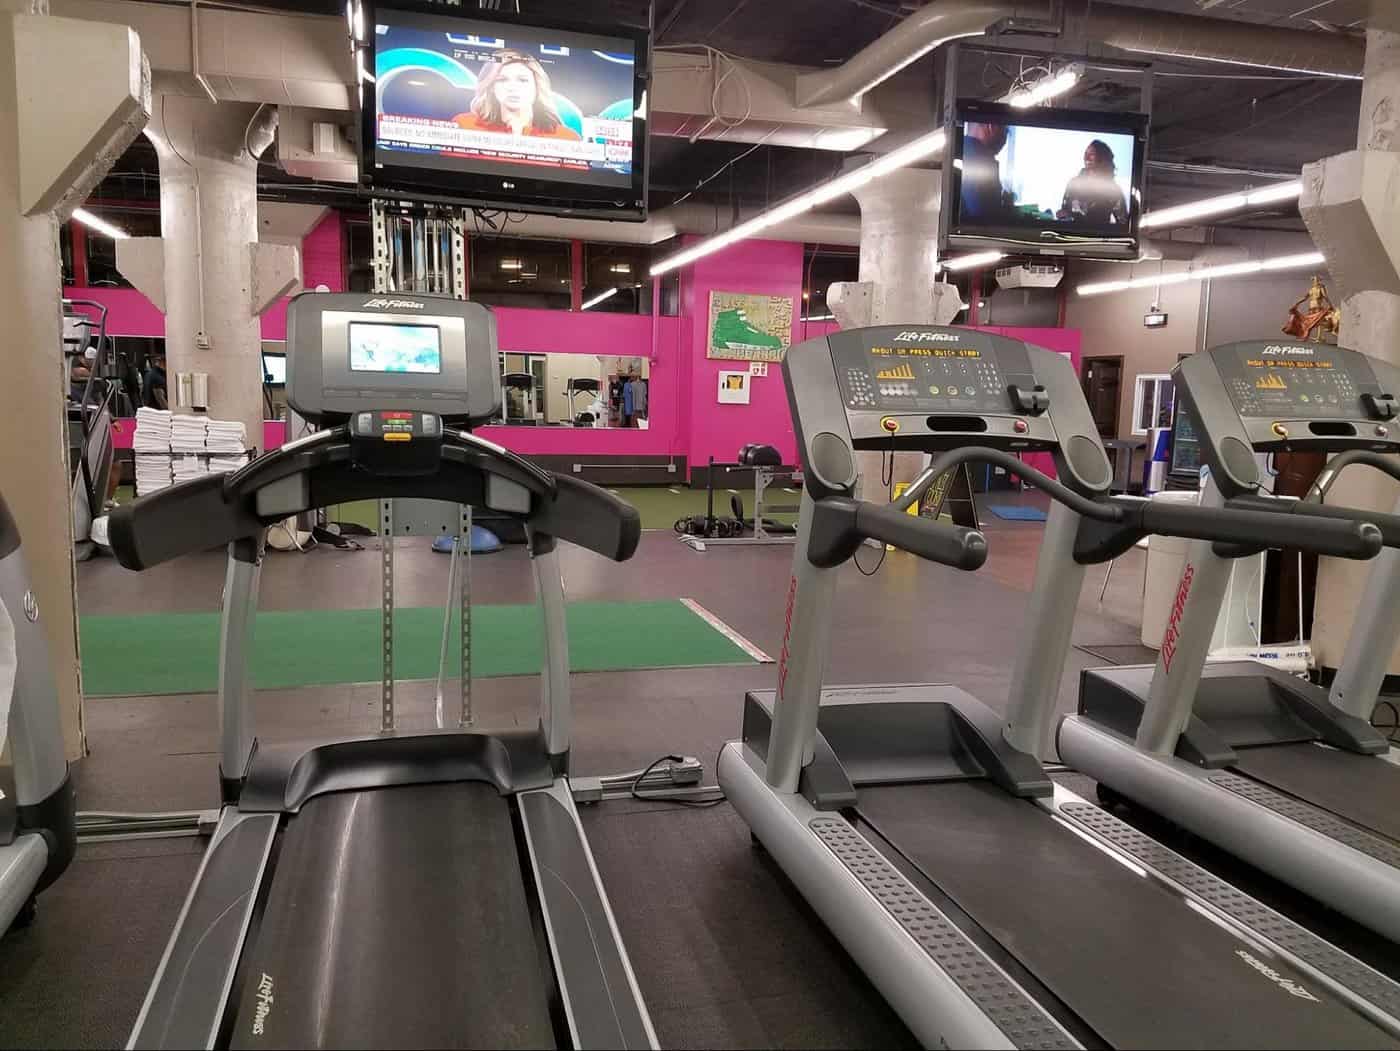 treadmill run